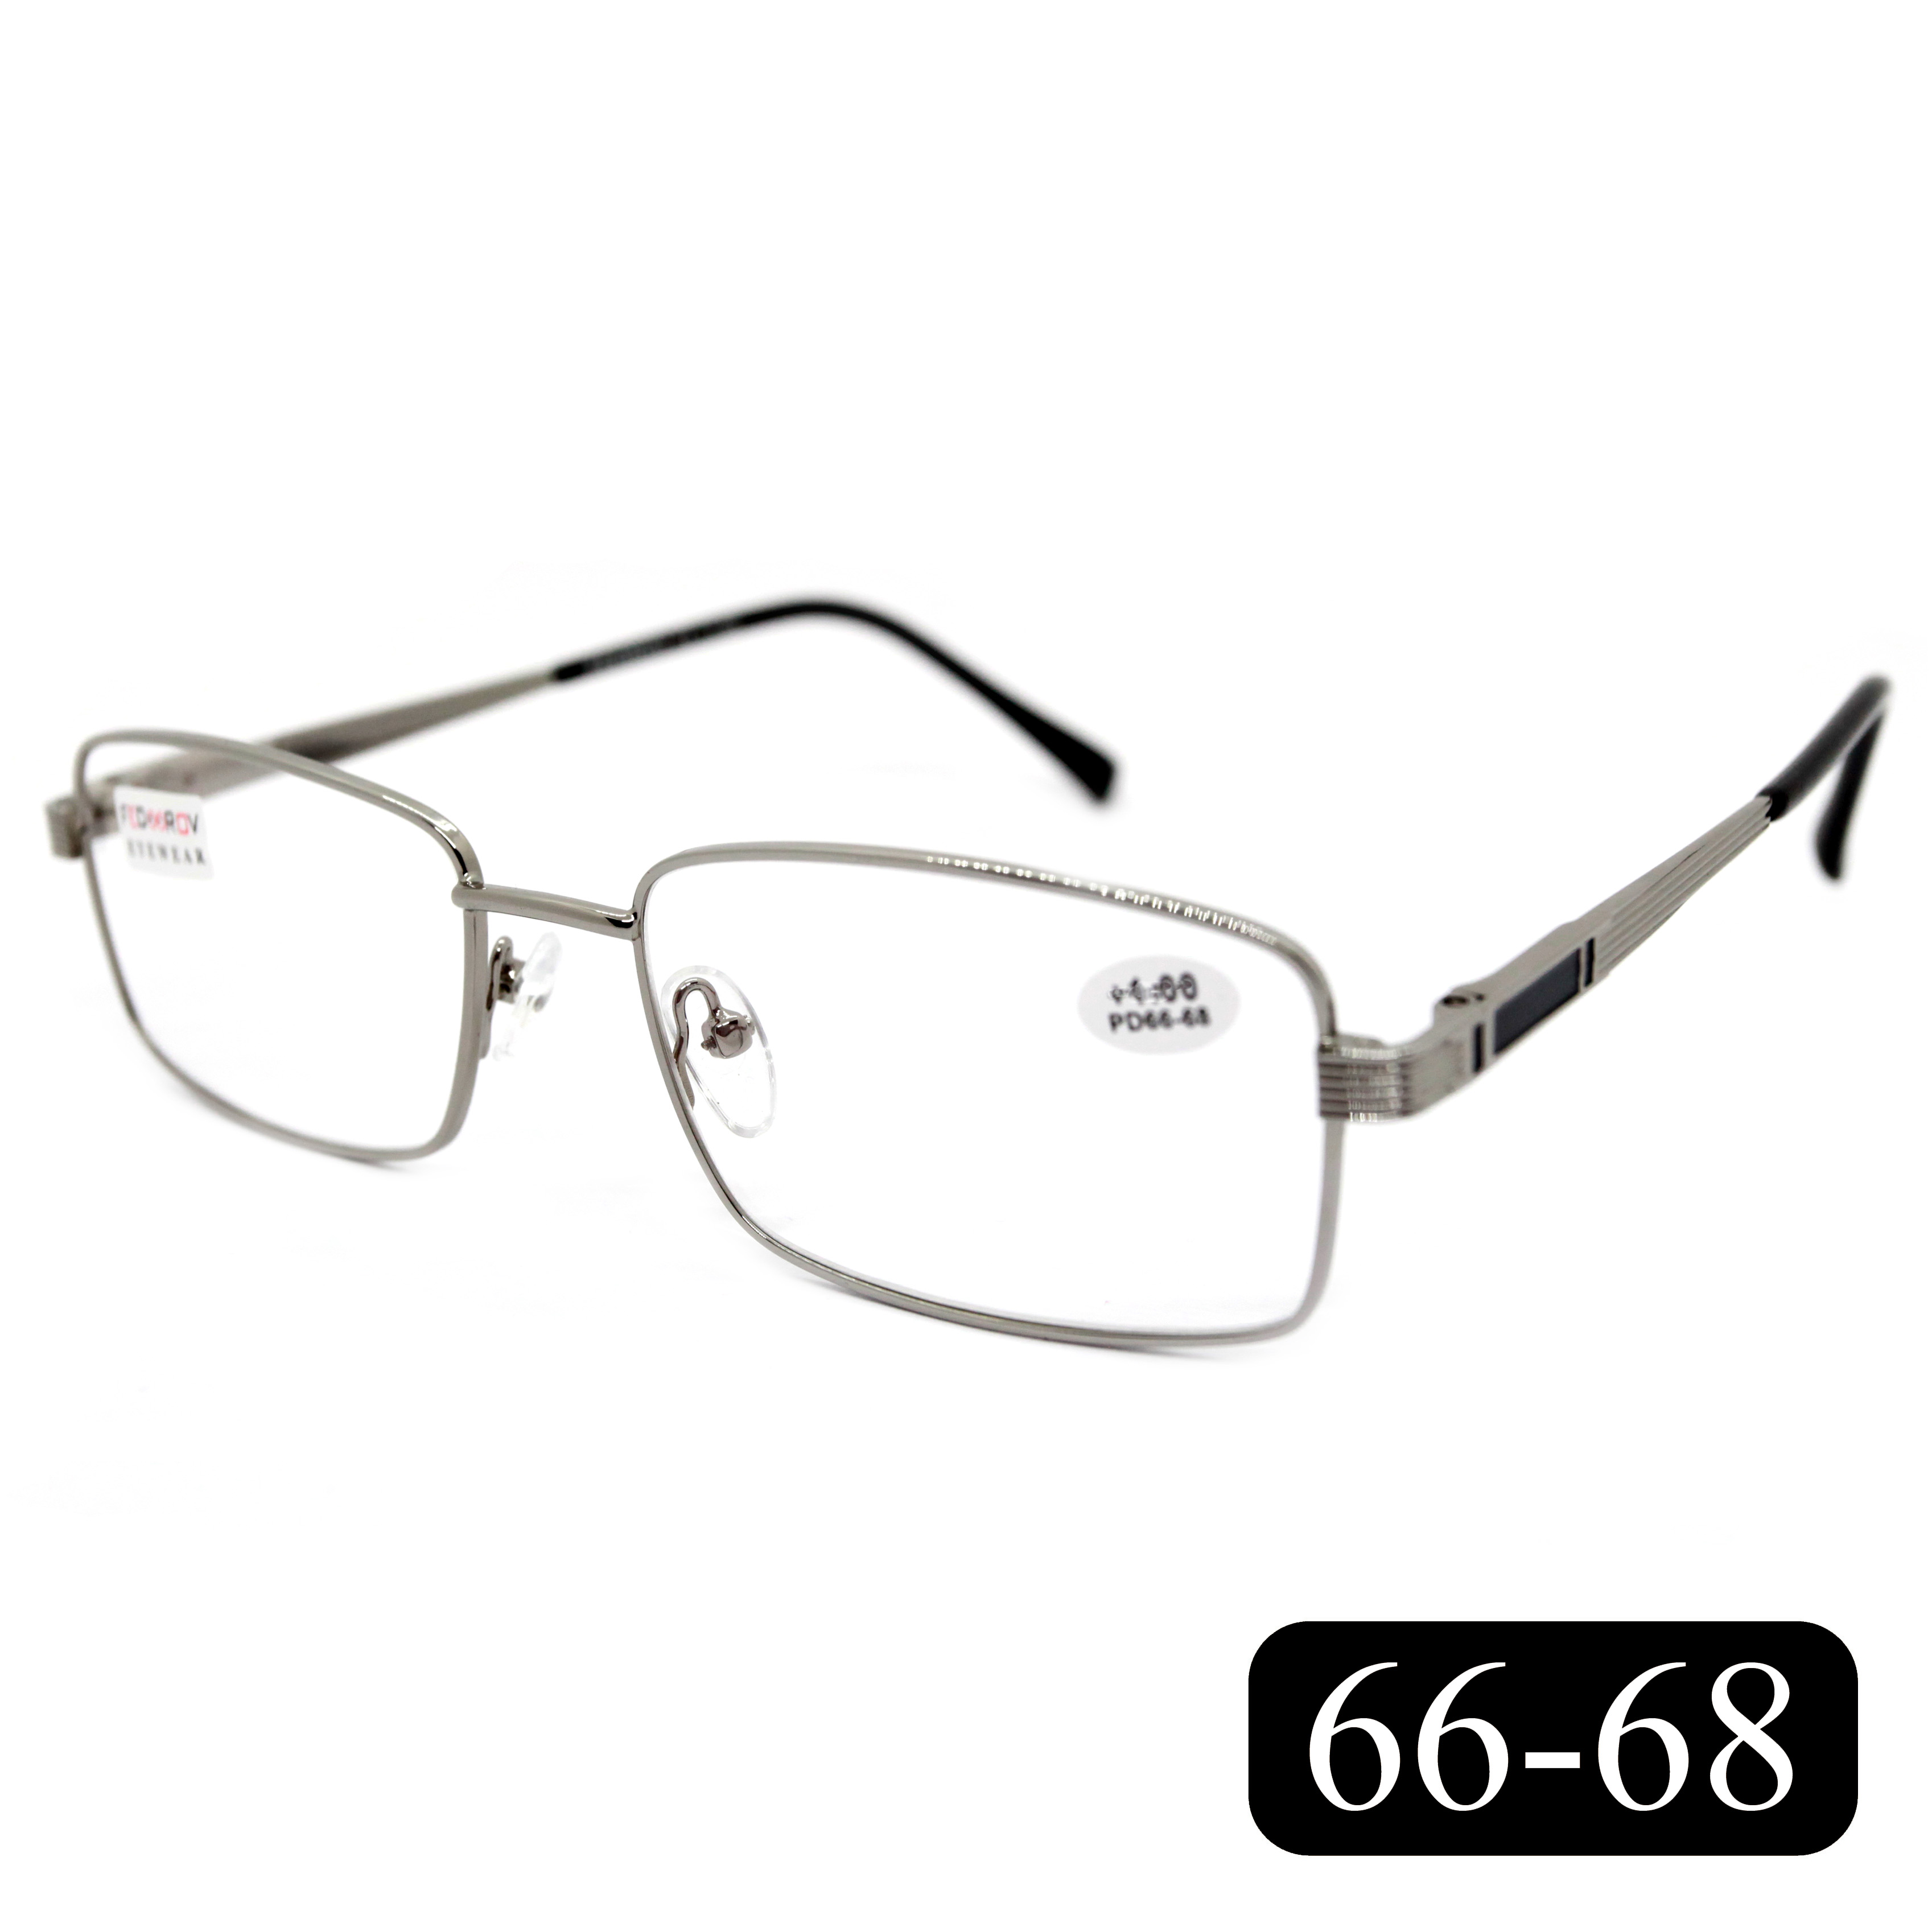 Готовые очки Fedrov 556 +3,00, без футляра, с антибликом, серебристый, РЦ 66-68